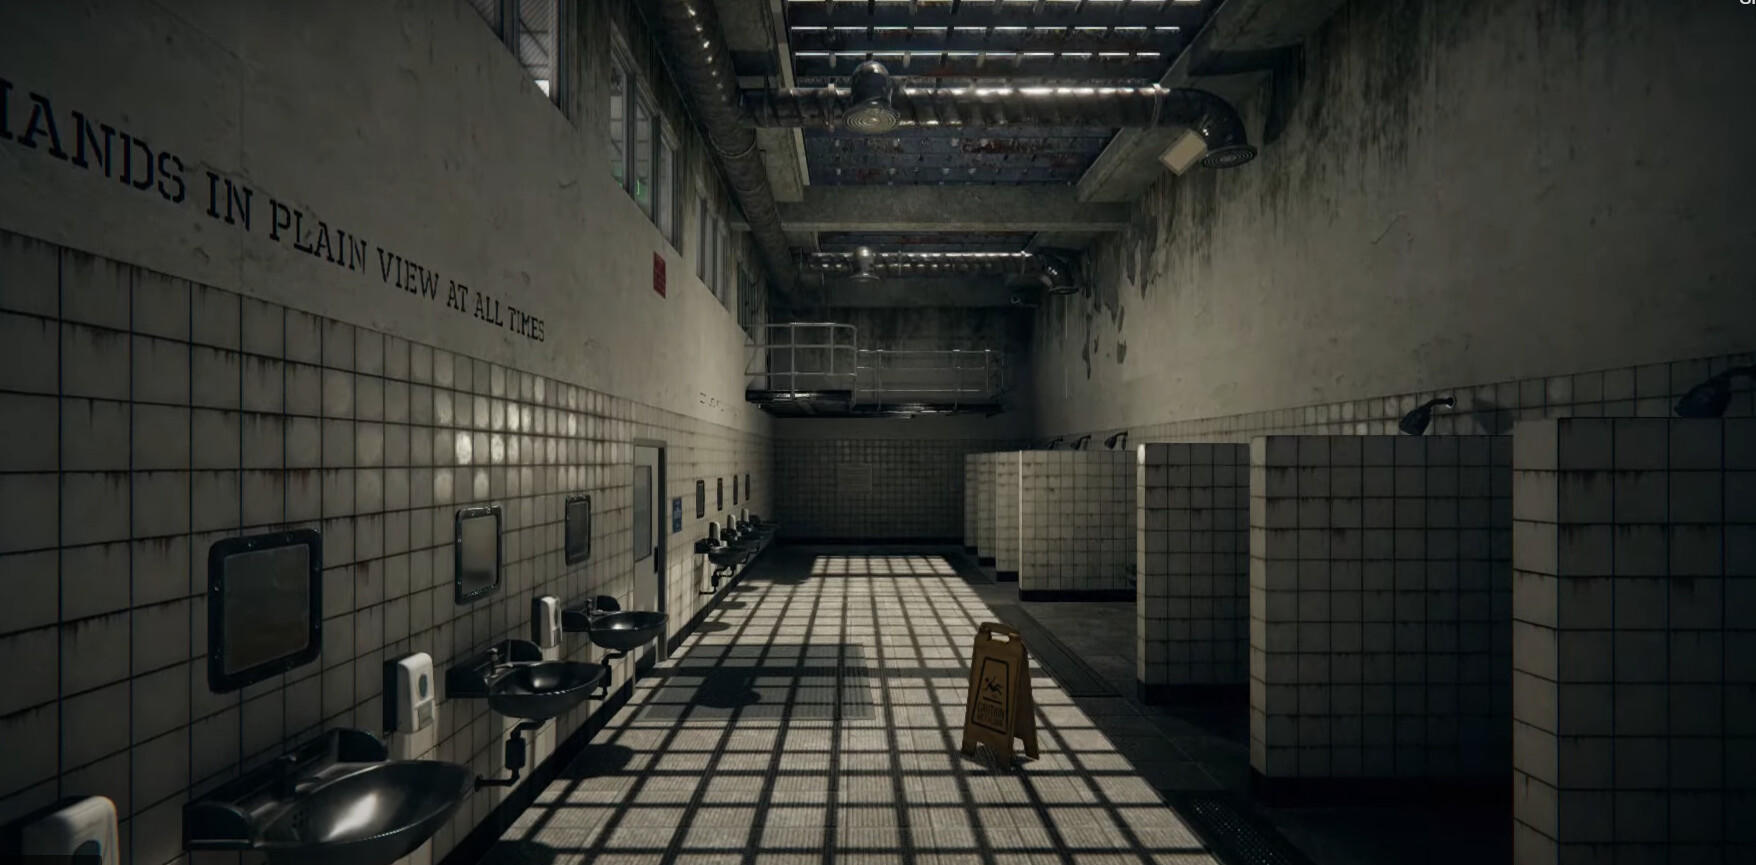 Jail Escape Plan VR screenshot game